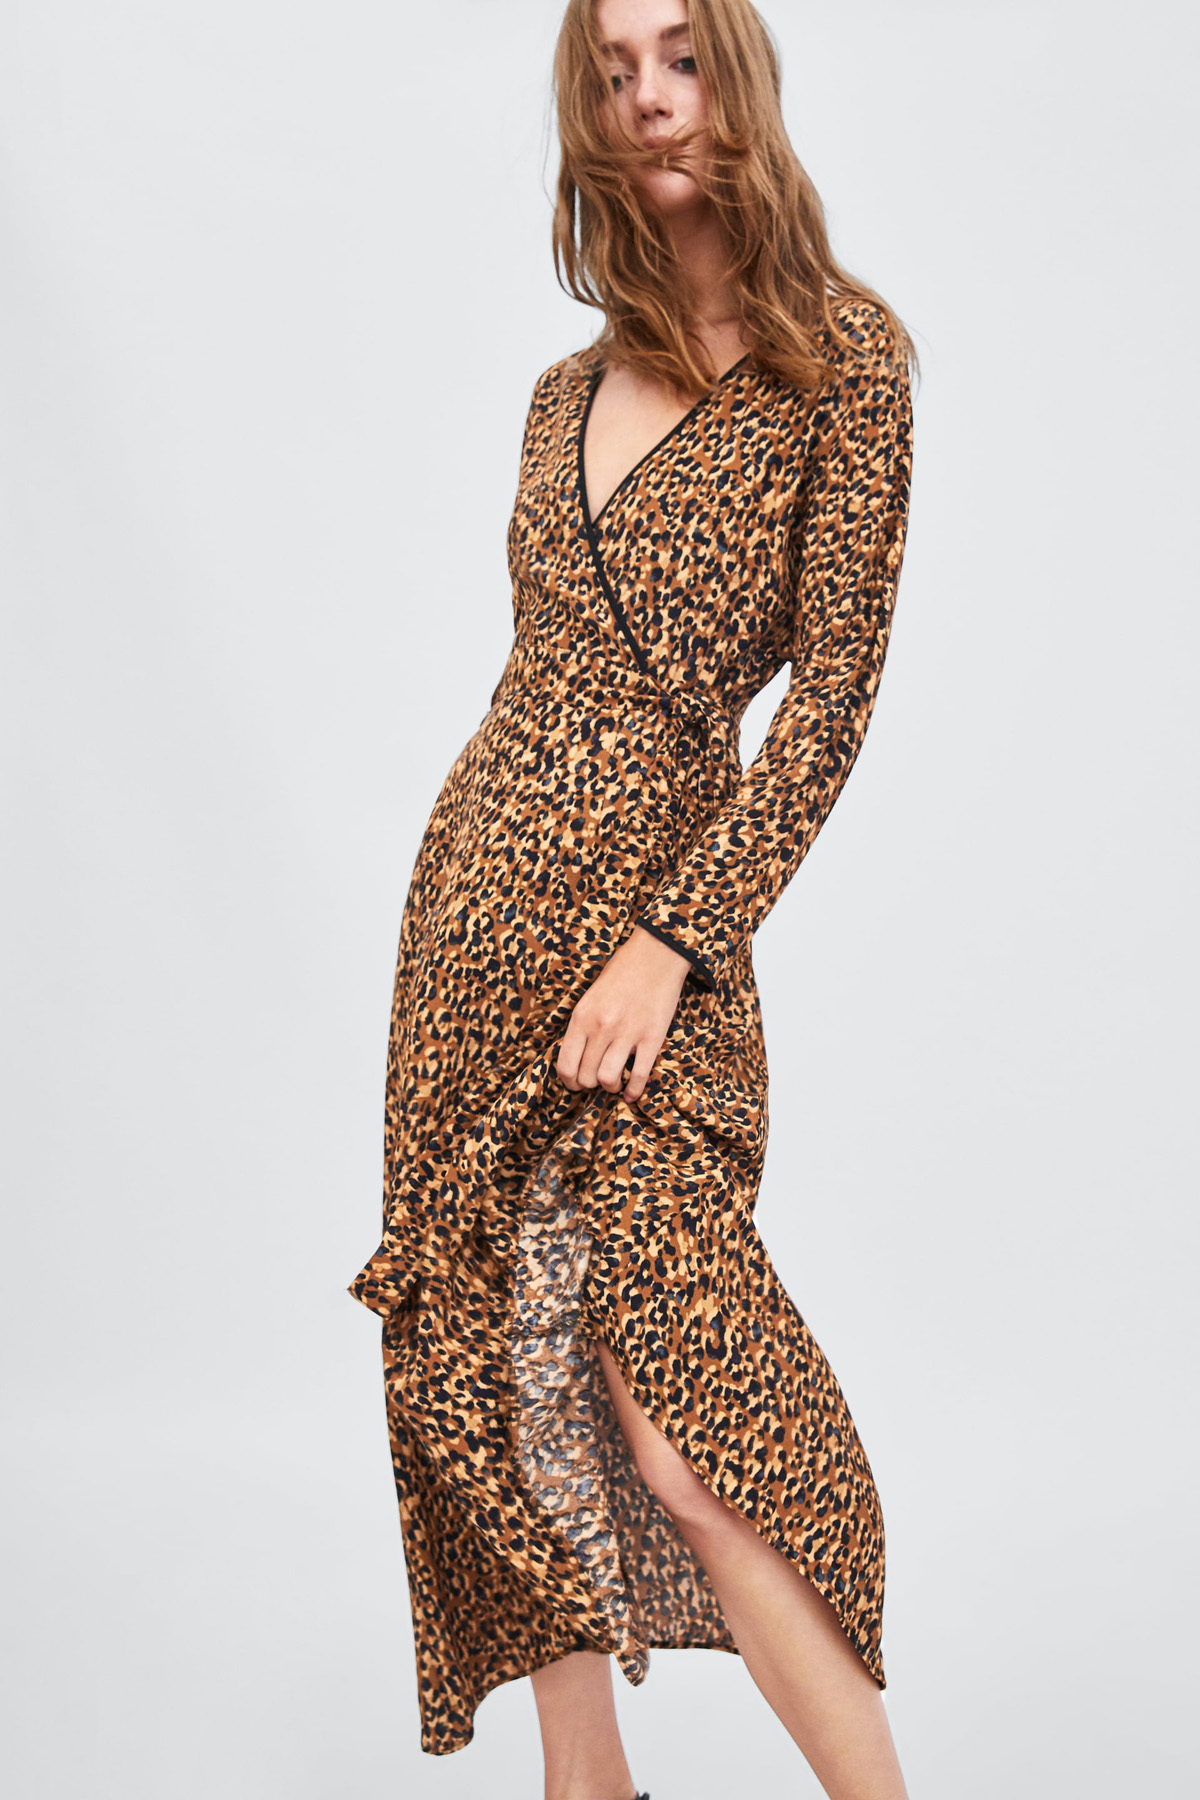 zara leopard print dress uk